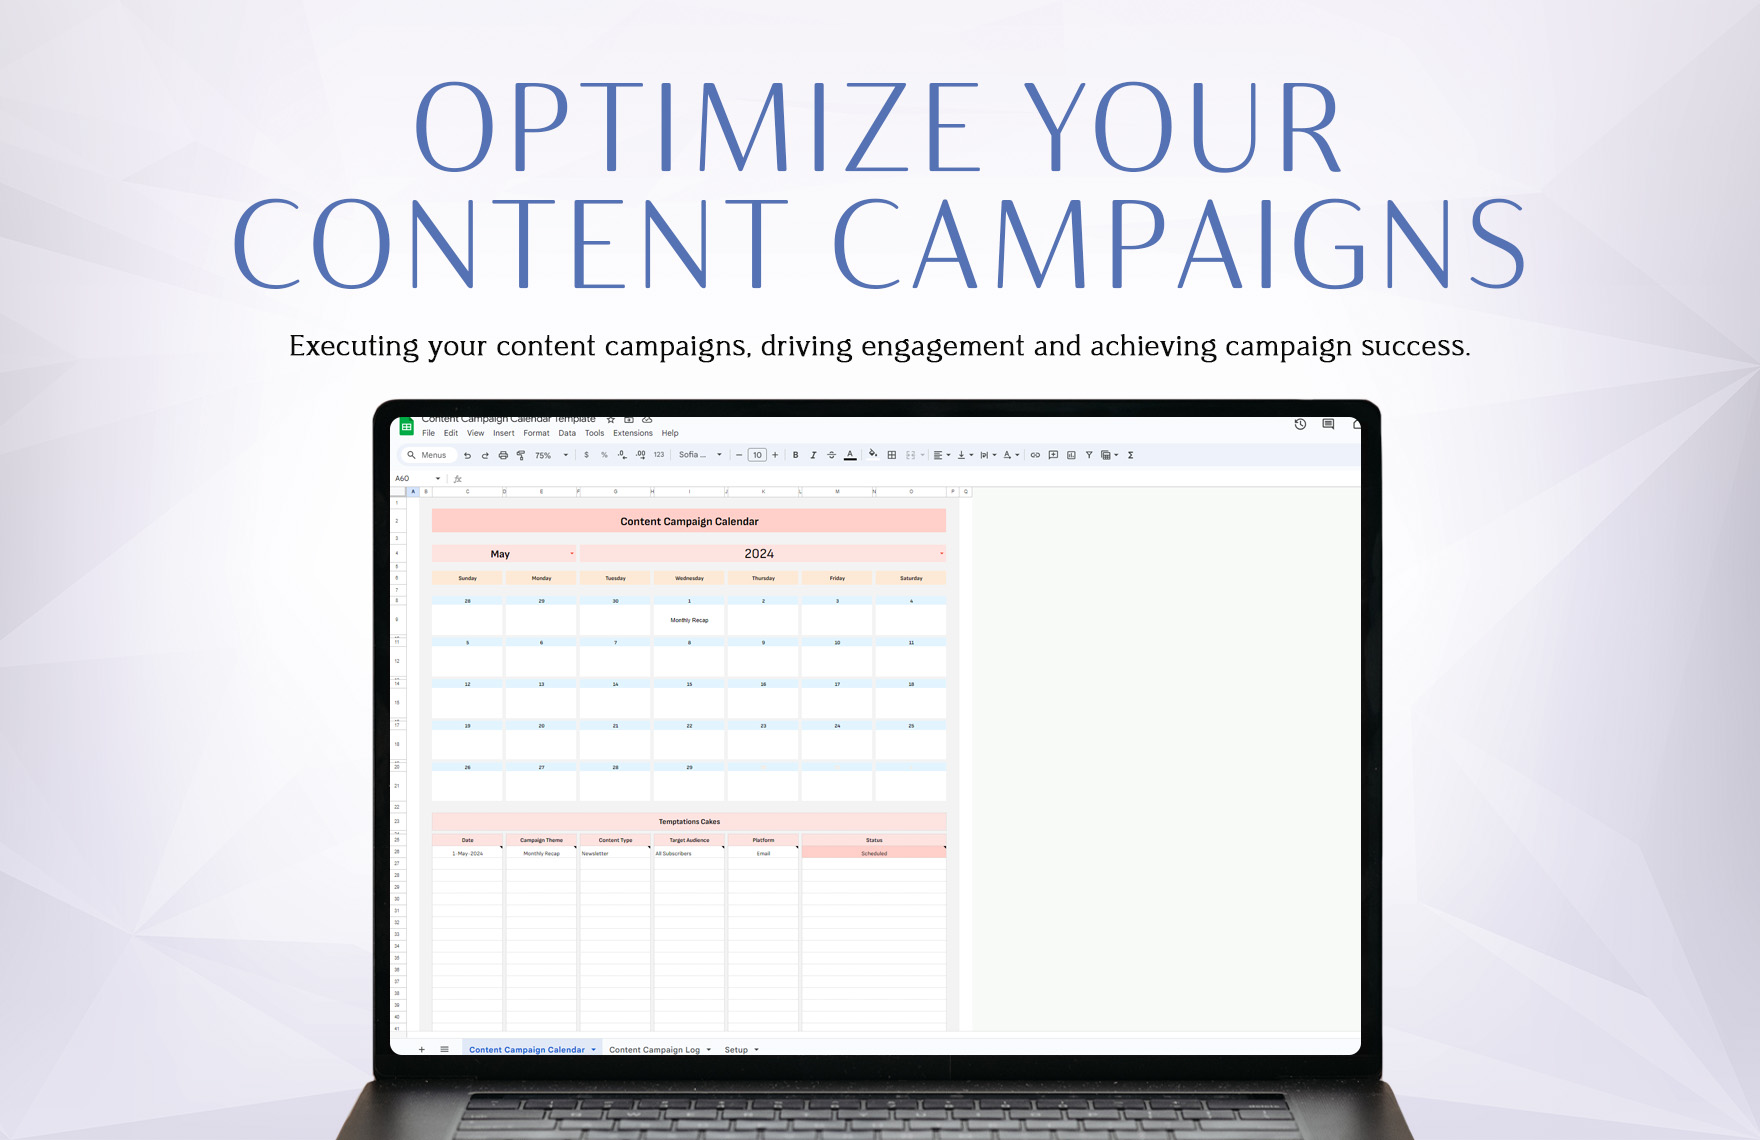 Content Campaign Calendar Template